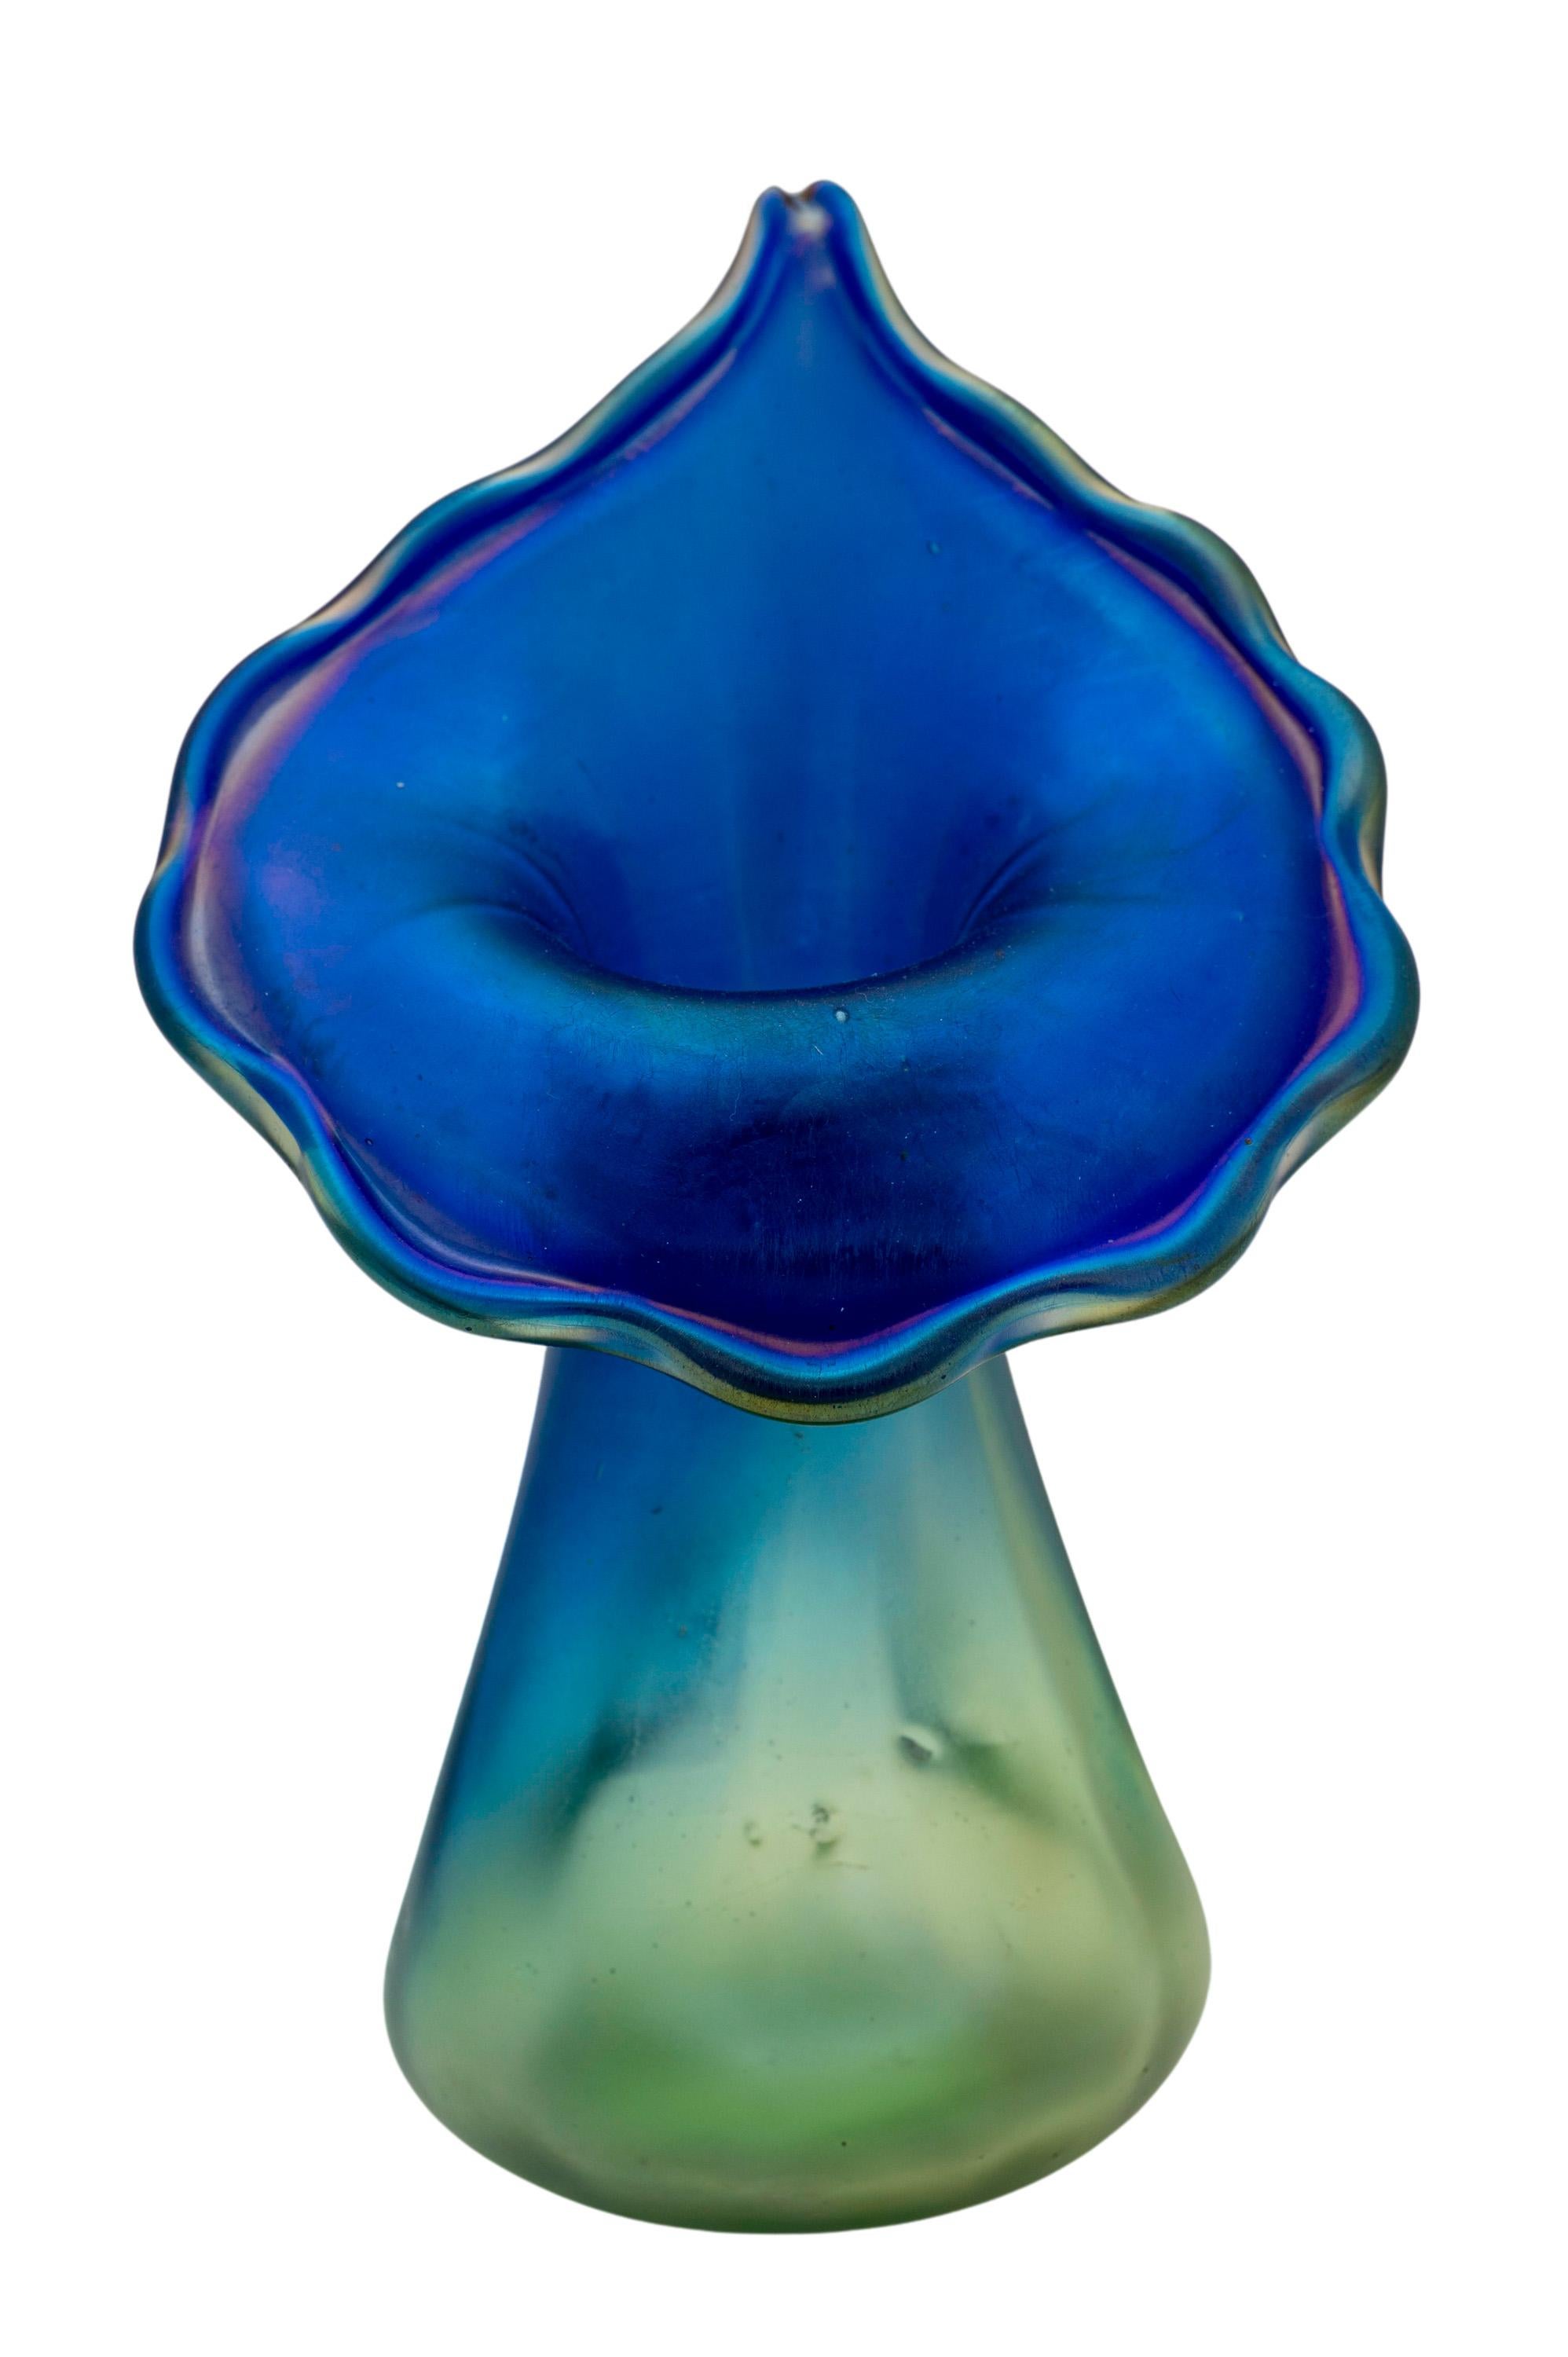 Austrian Antique Art Nouveau Glass Vase Loetz Luna Decoration 1901 Vienna Jugendstil Blue For Sale